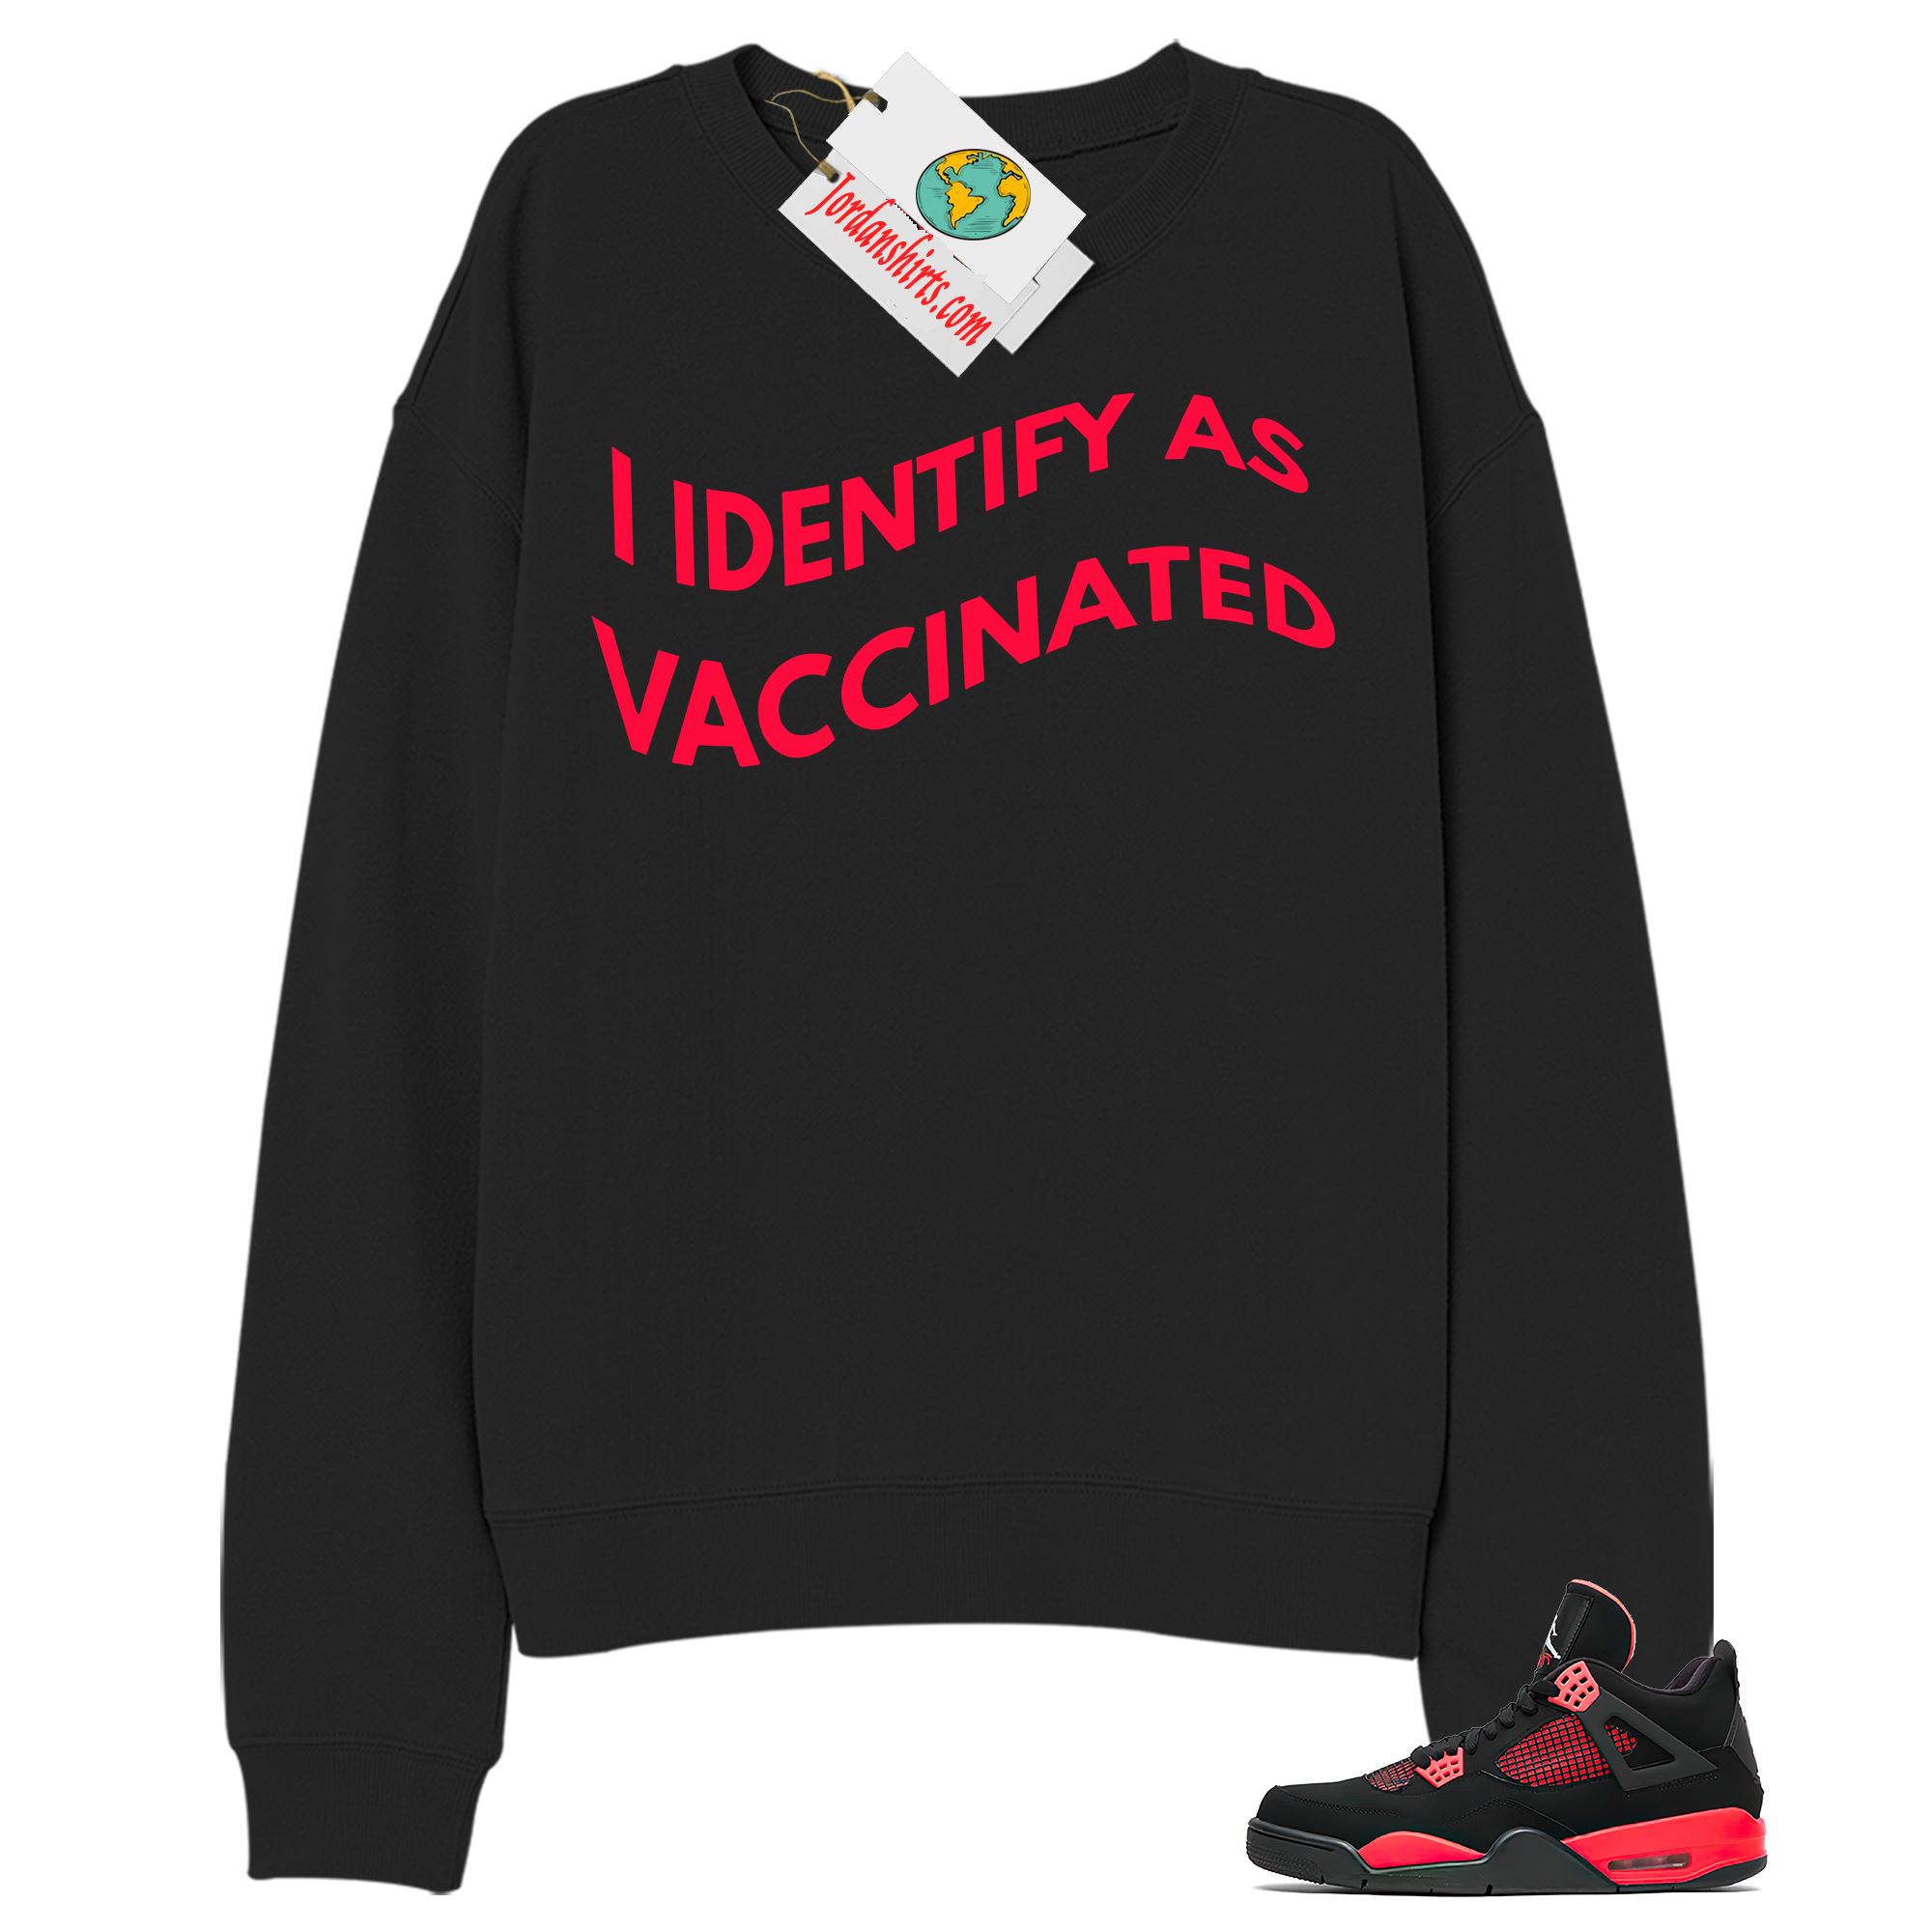 Jordan 4 Sweatshirt, I Identify As Vaccinated Black Sweatshirt Air Jordan 4 Red Thunder 4s Size Up To 5xl